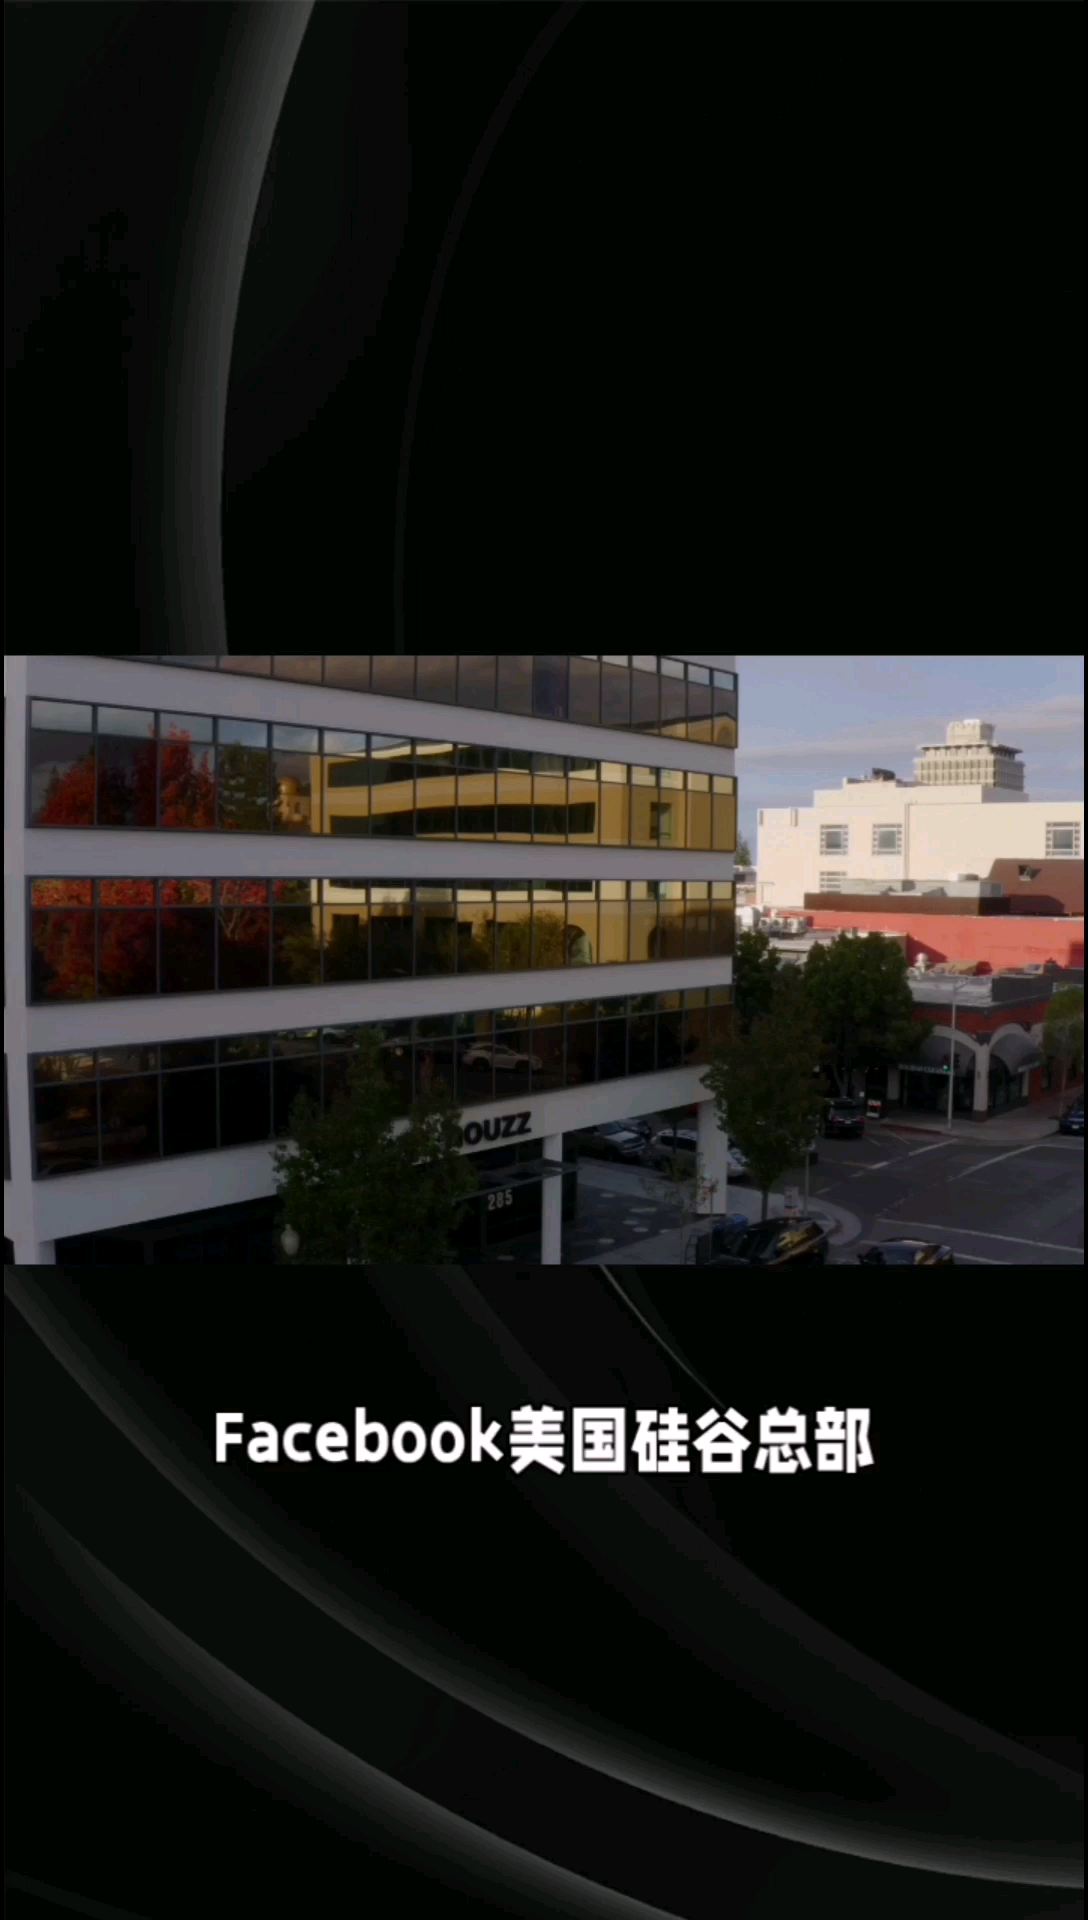 Facebook总部MPK 20，建筑艺术与自然环境的完美融